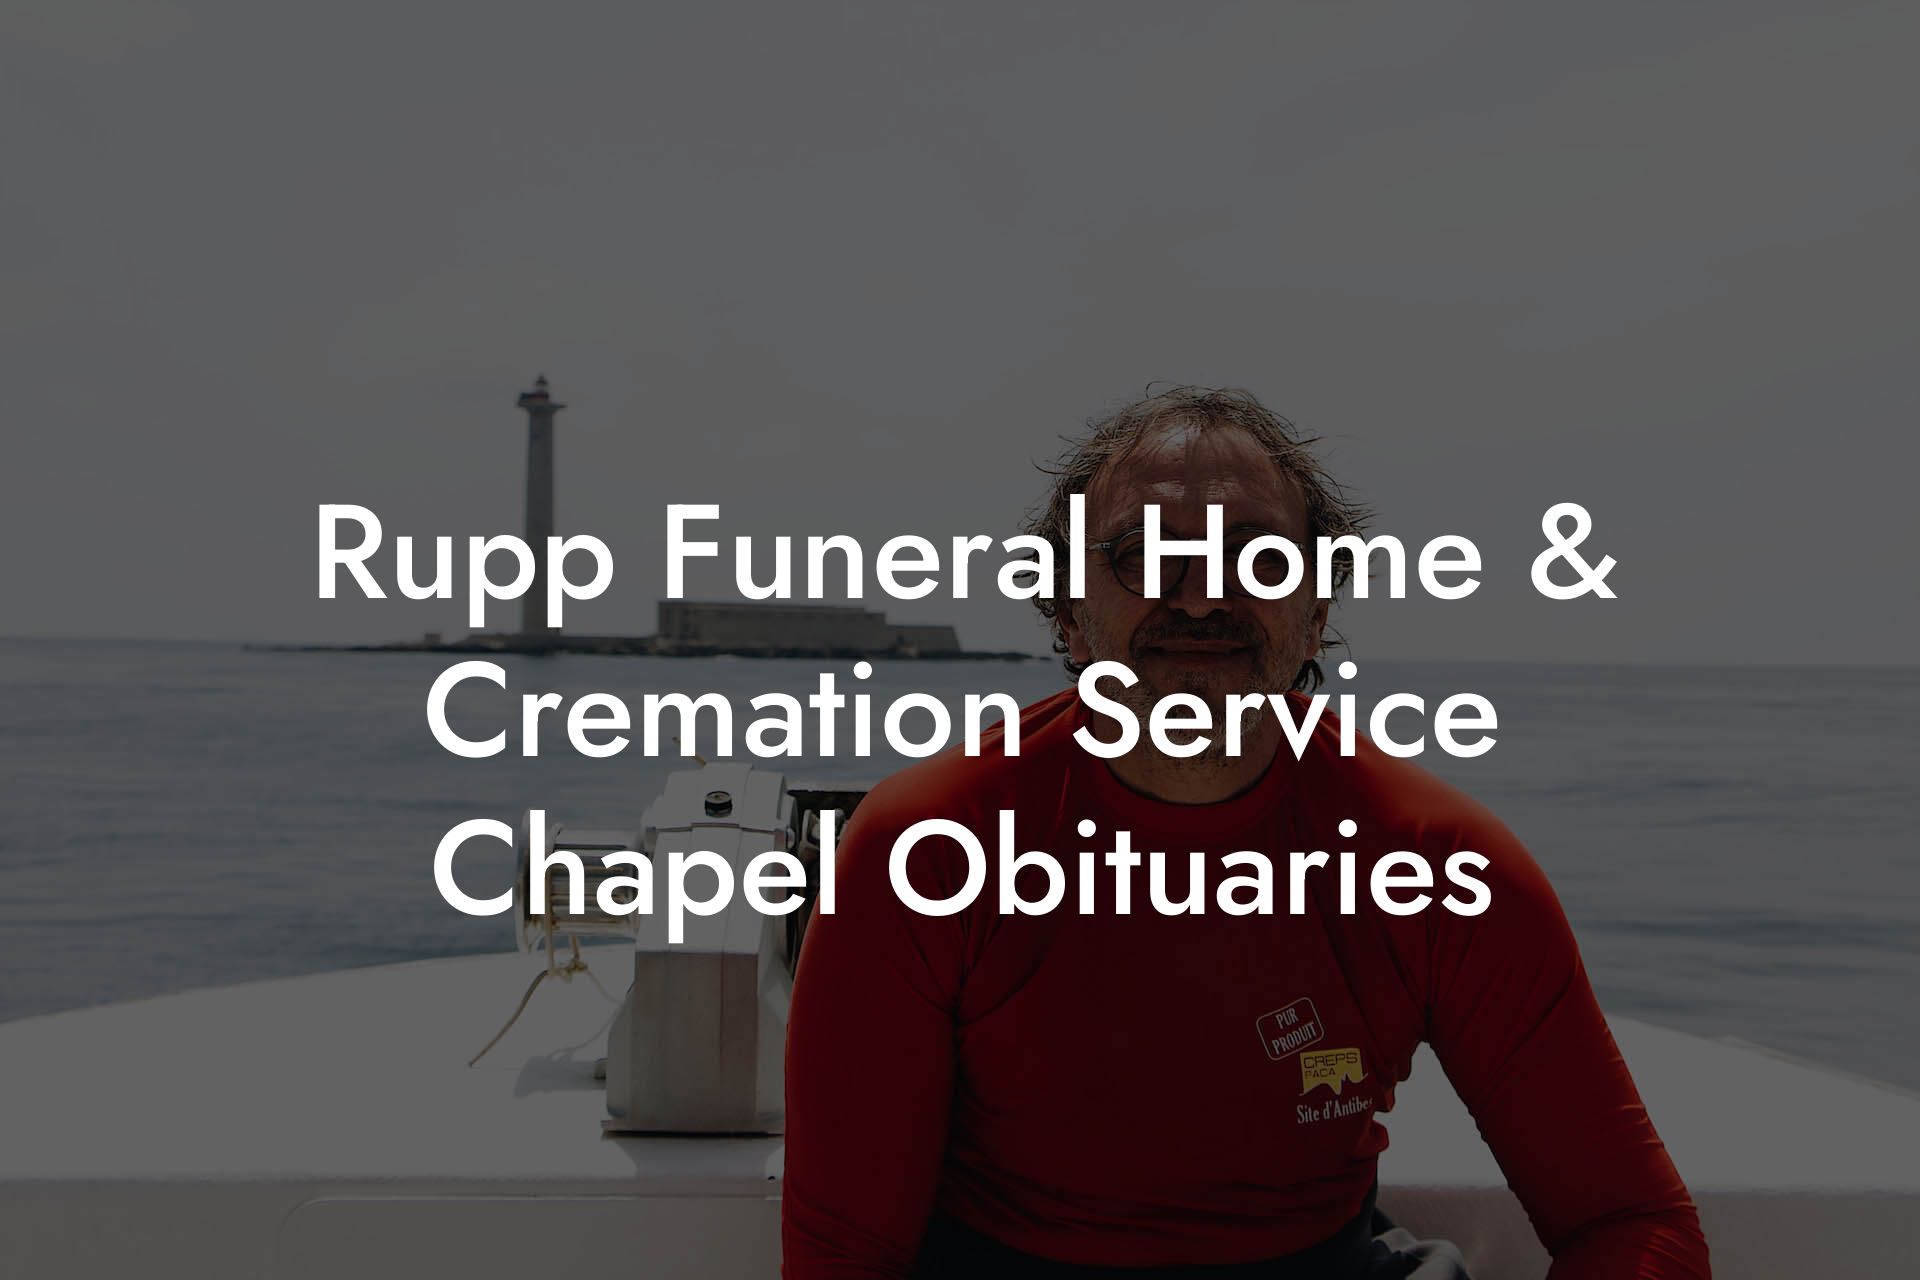 Rupp Funeral Home & Cremation Service Chapel Obituaries